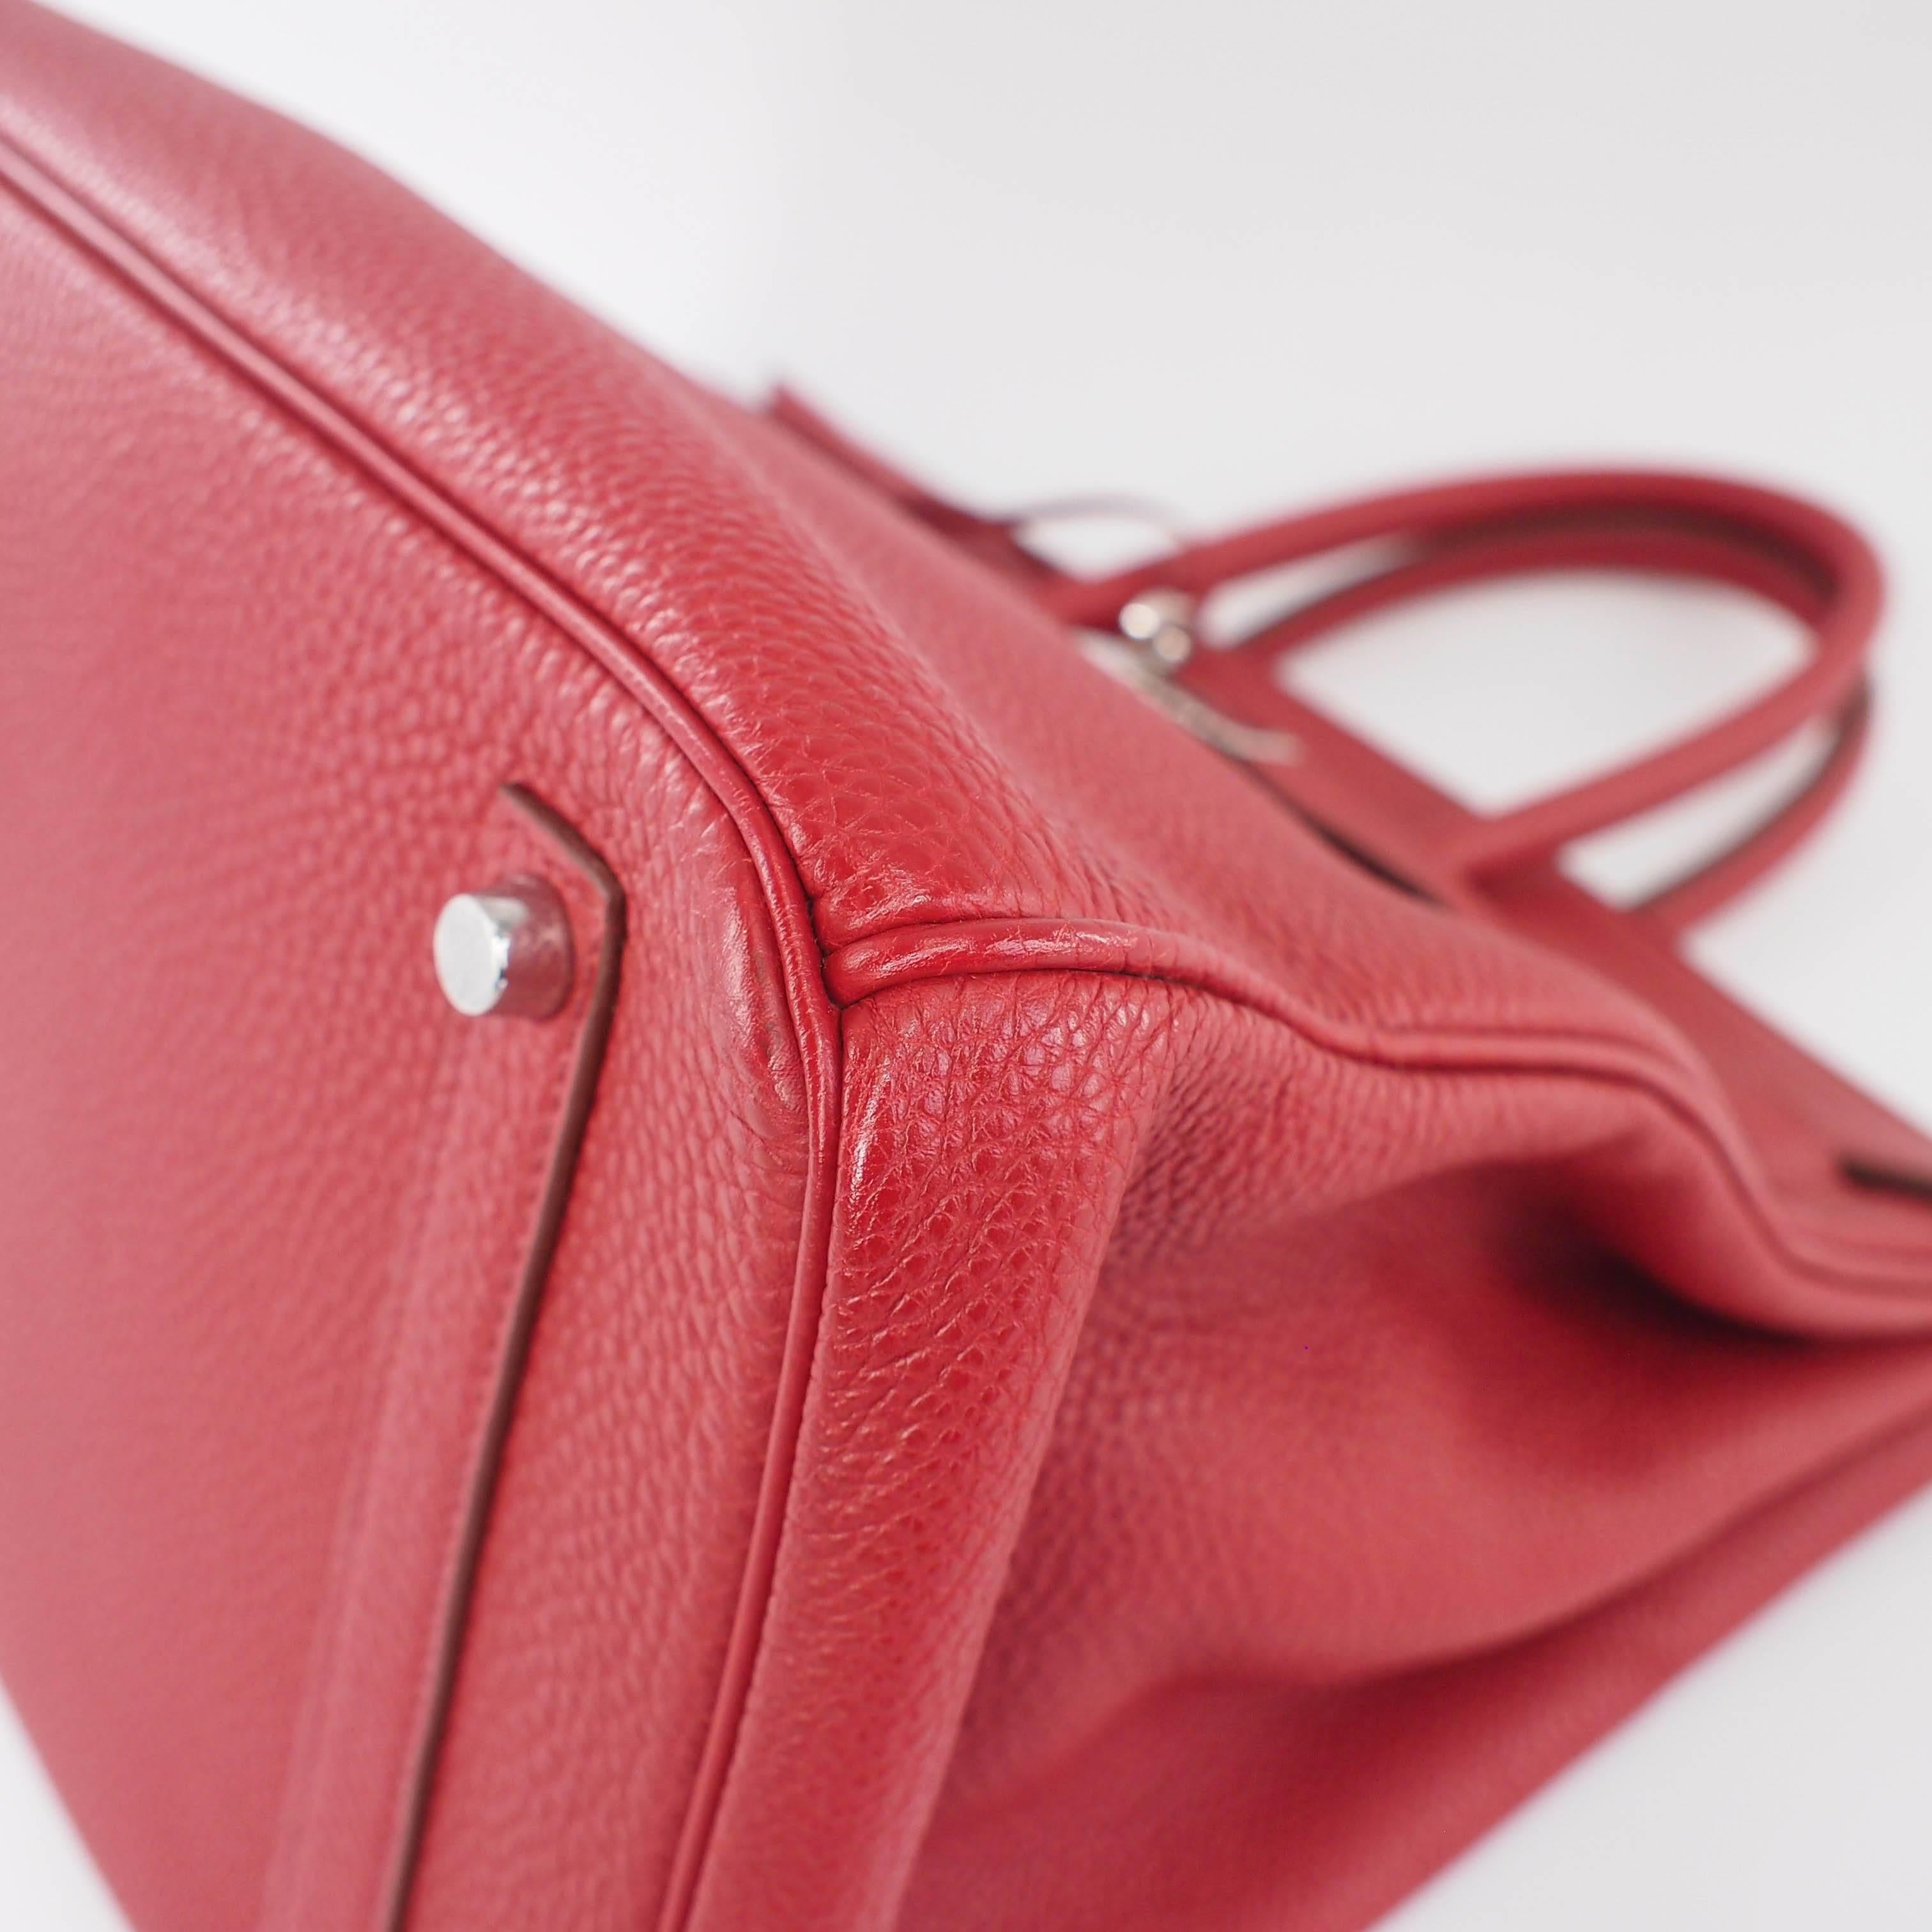 Hermes Birkin Handbag size 35 in Rouge Grenade With Palladium Hardware (PHW) 6